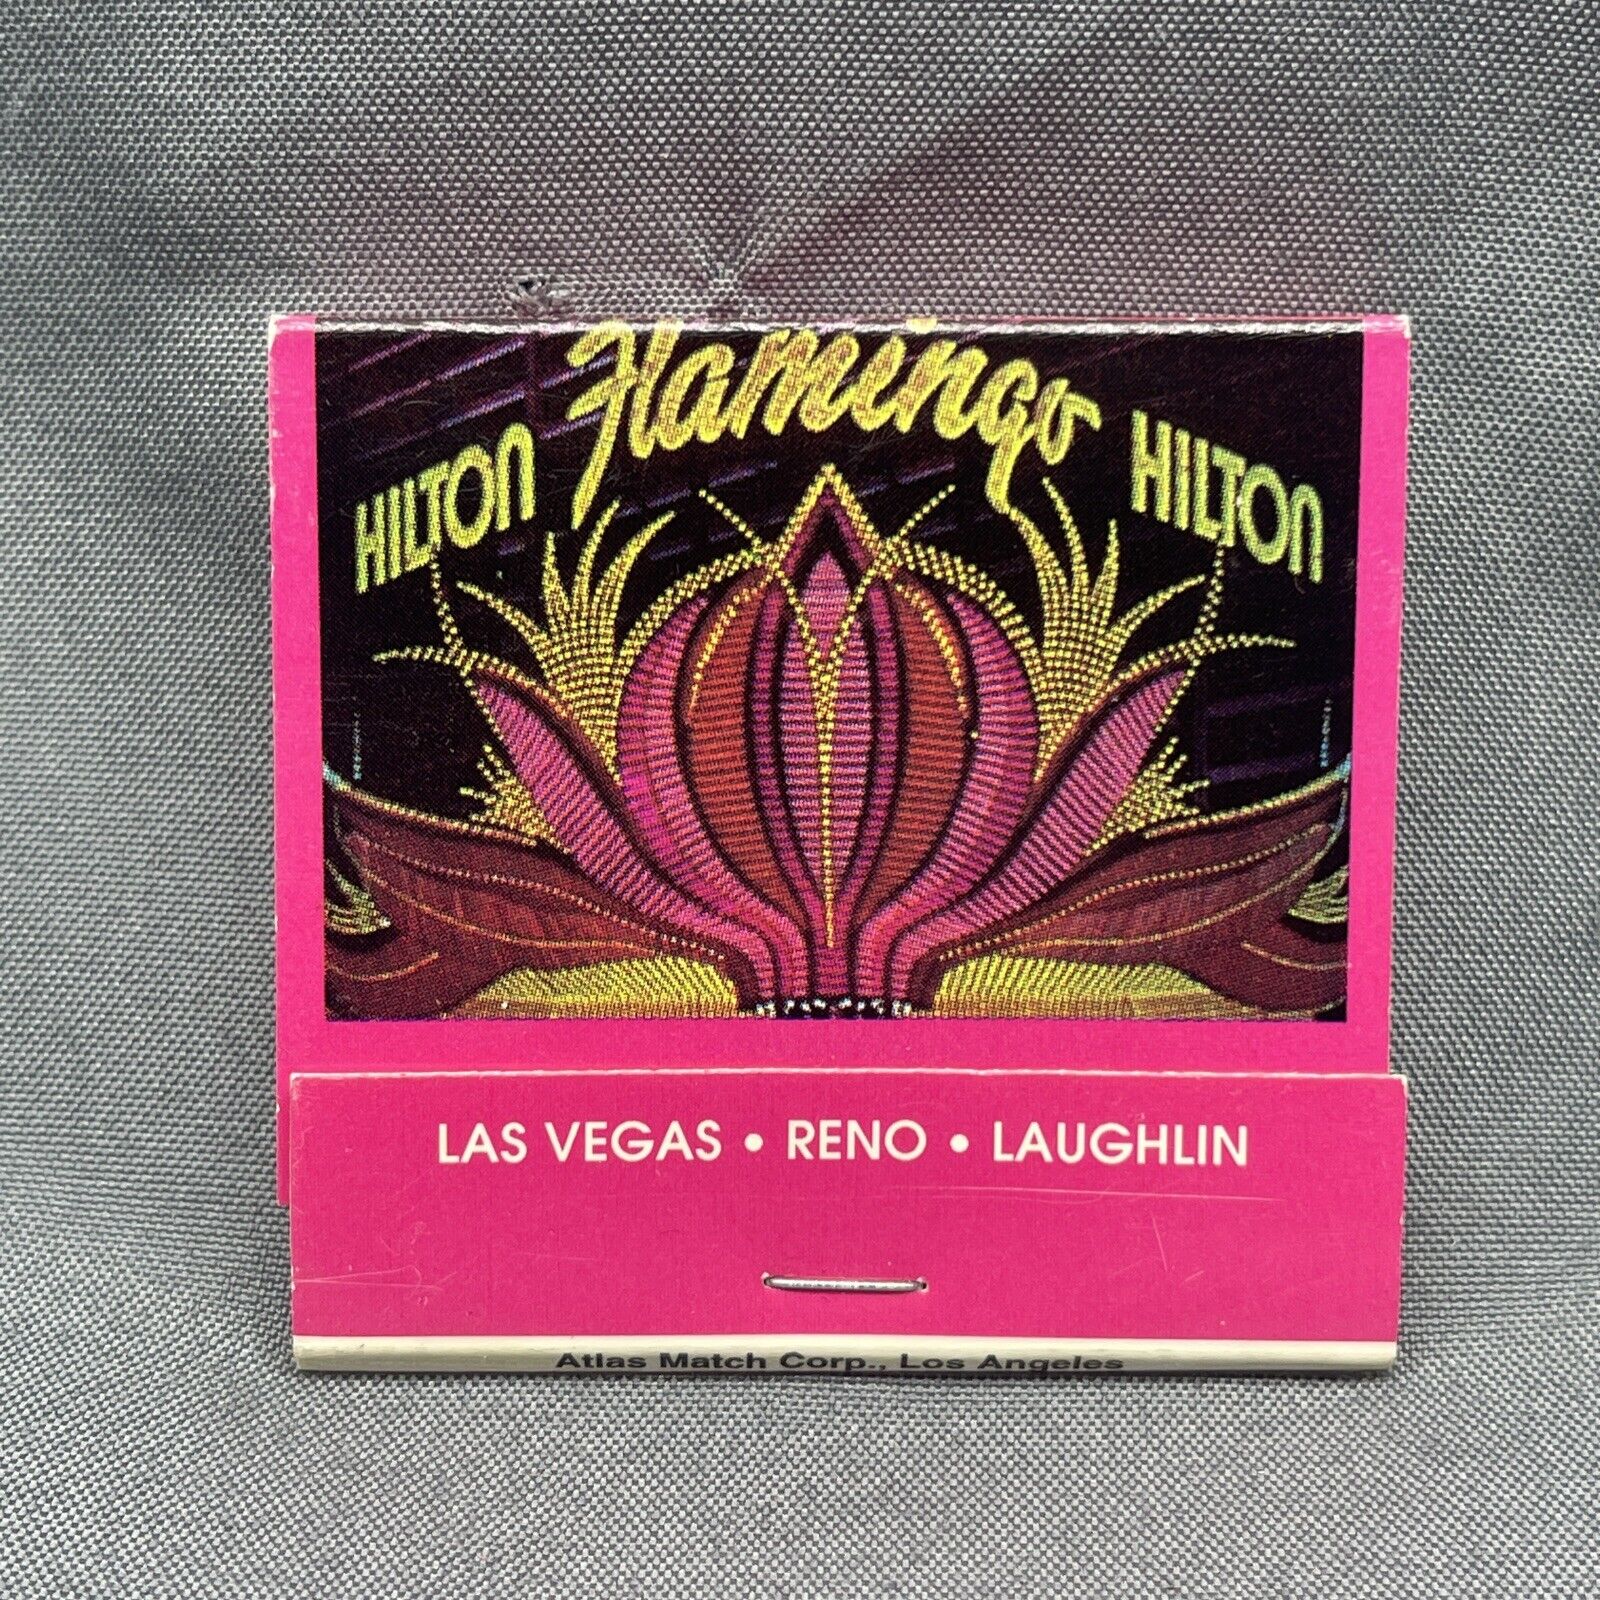 Flamingo Hilton Hotel Casino Las Vegas Nevada Matchbook Matches Vintage